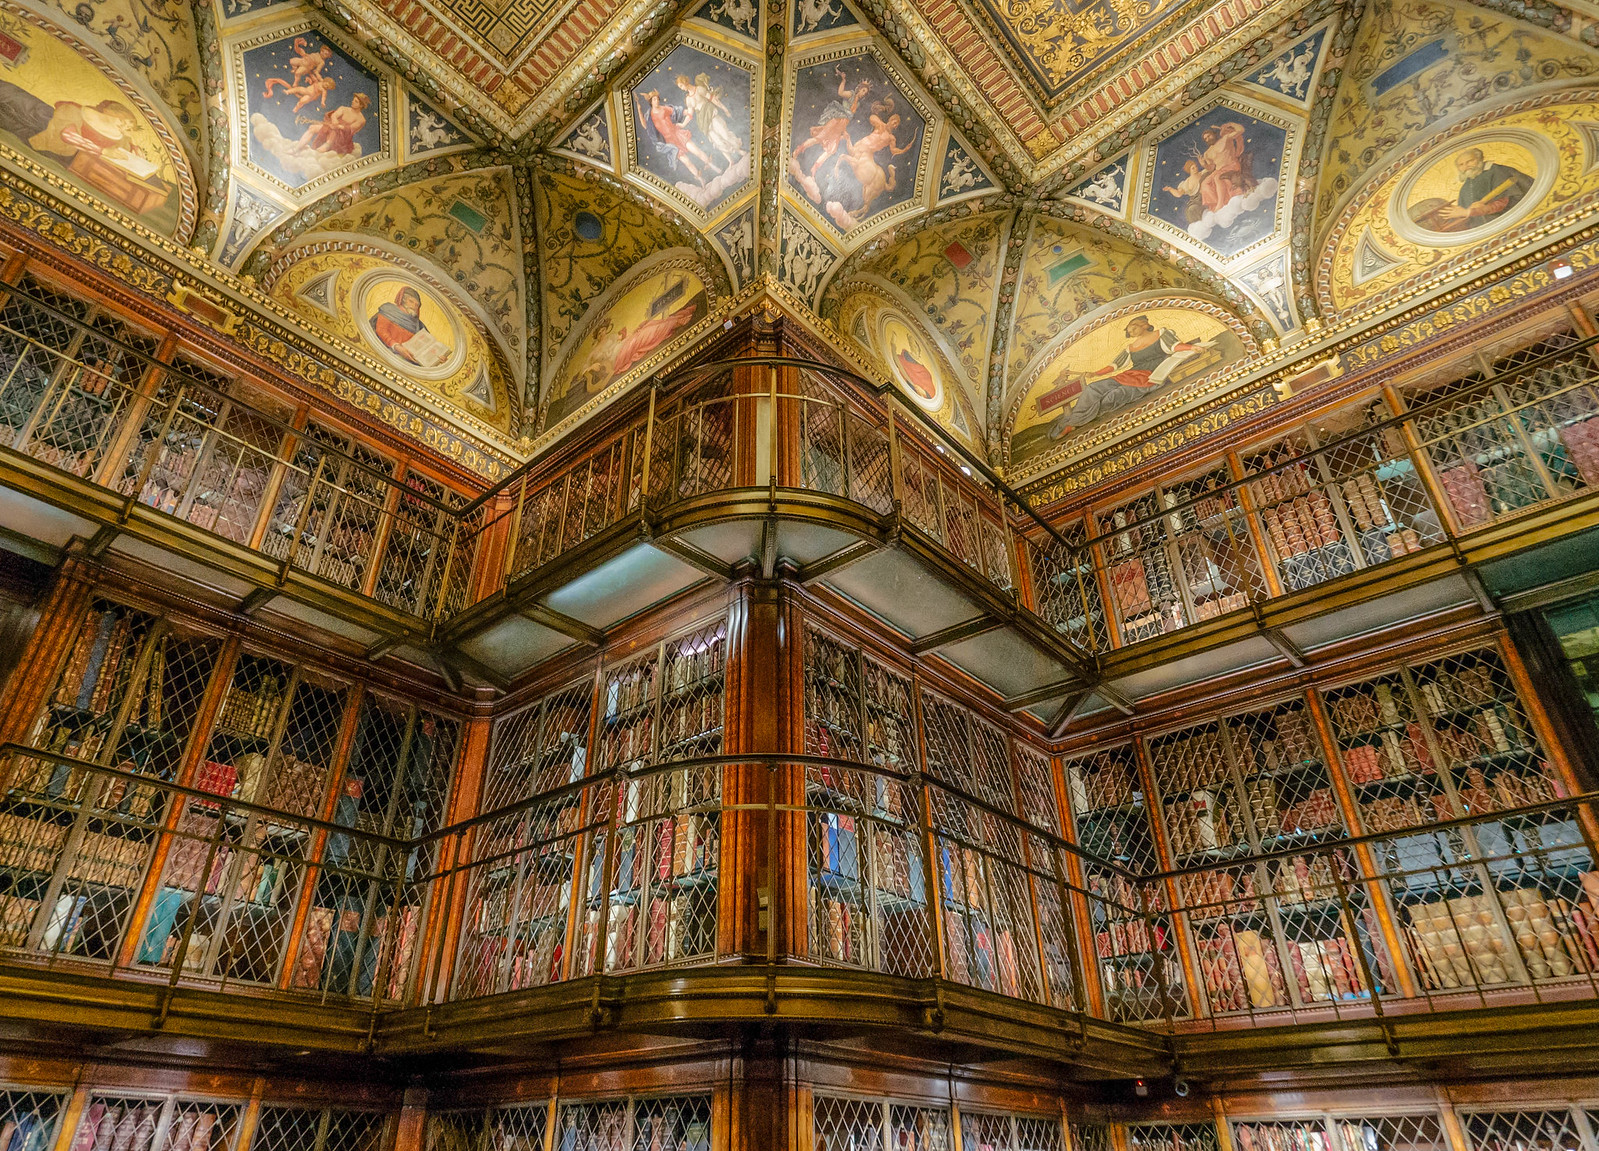 The Morgan Library - A New York City Hidden Gem - Travel Bliss Now